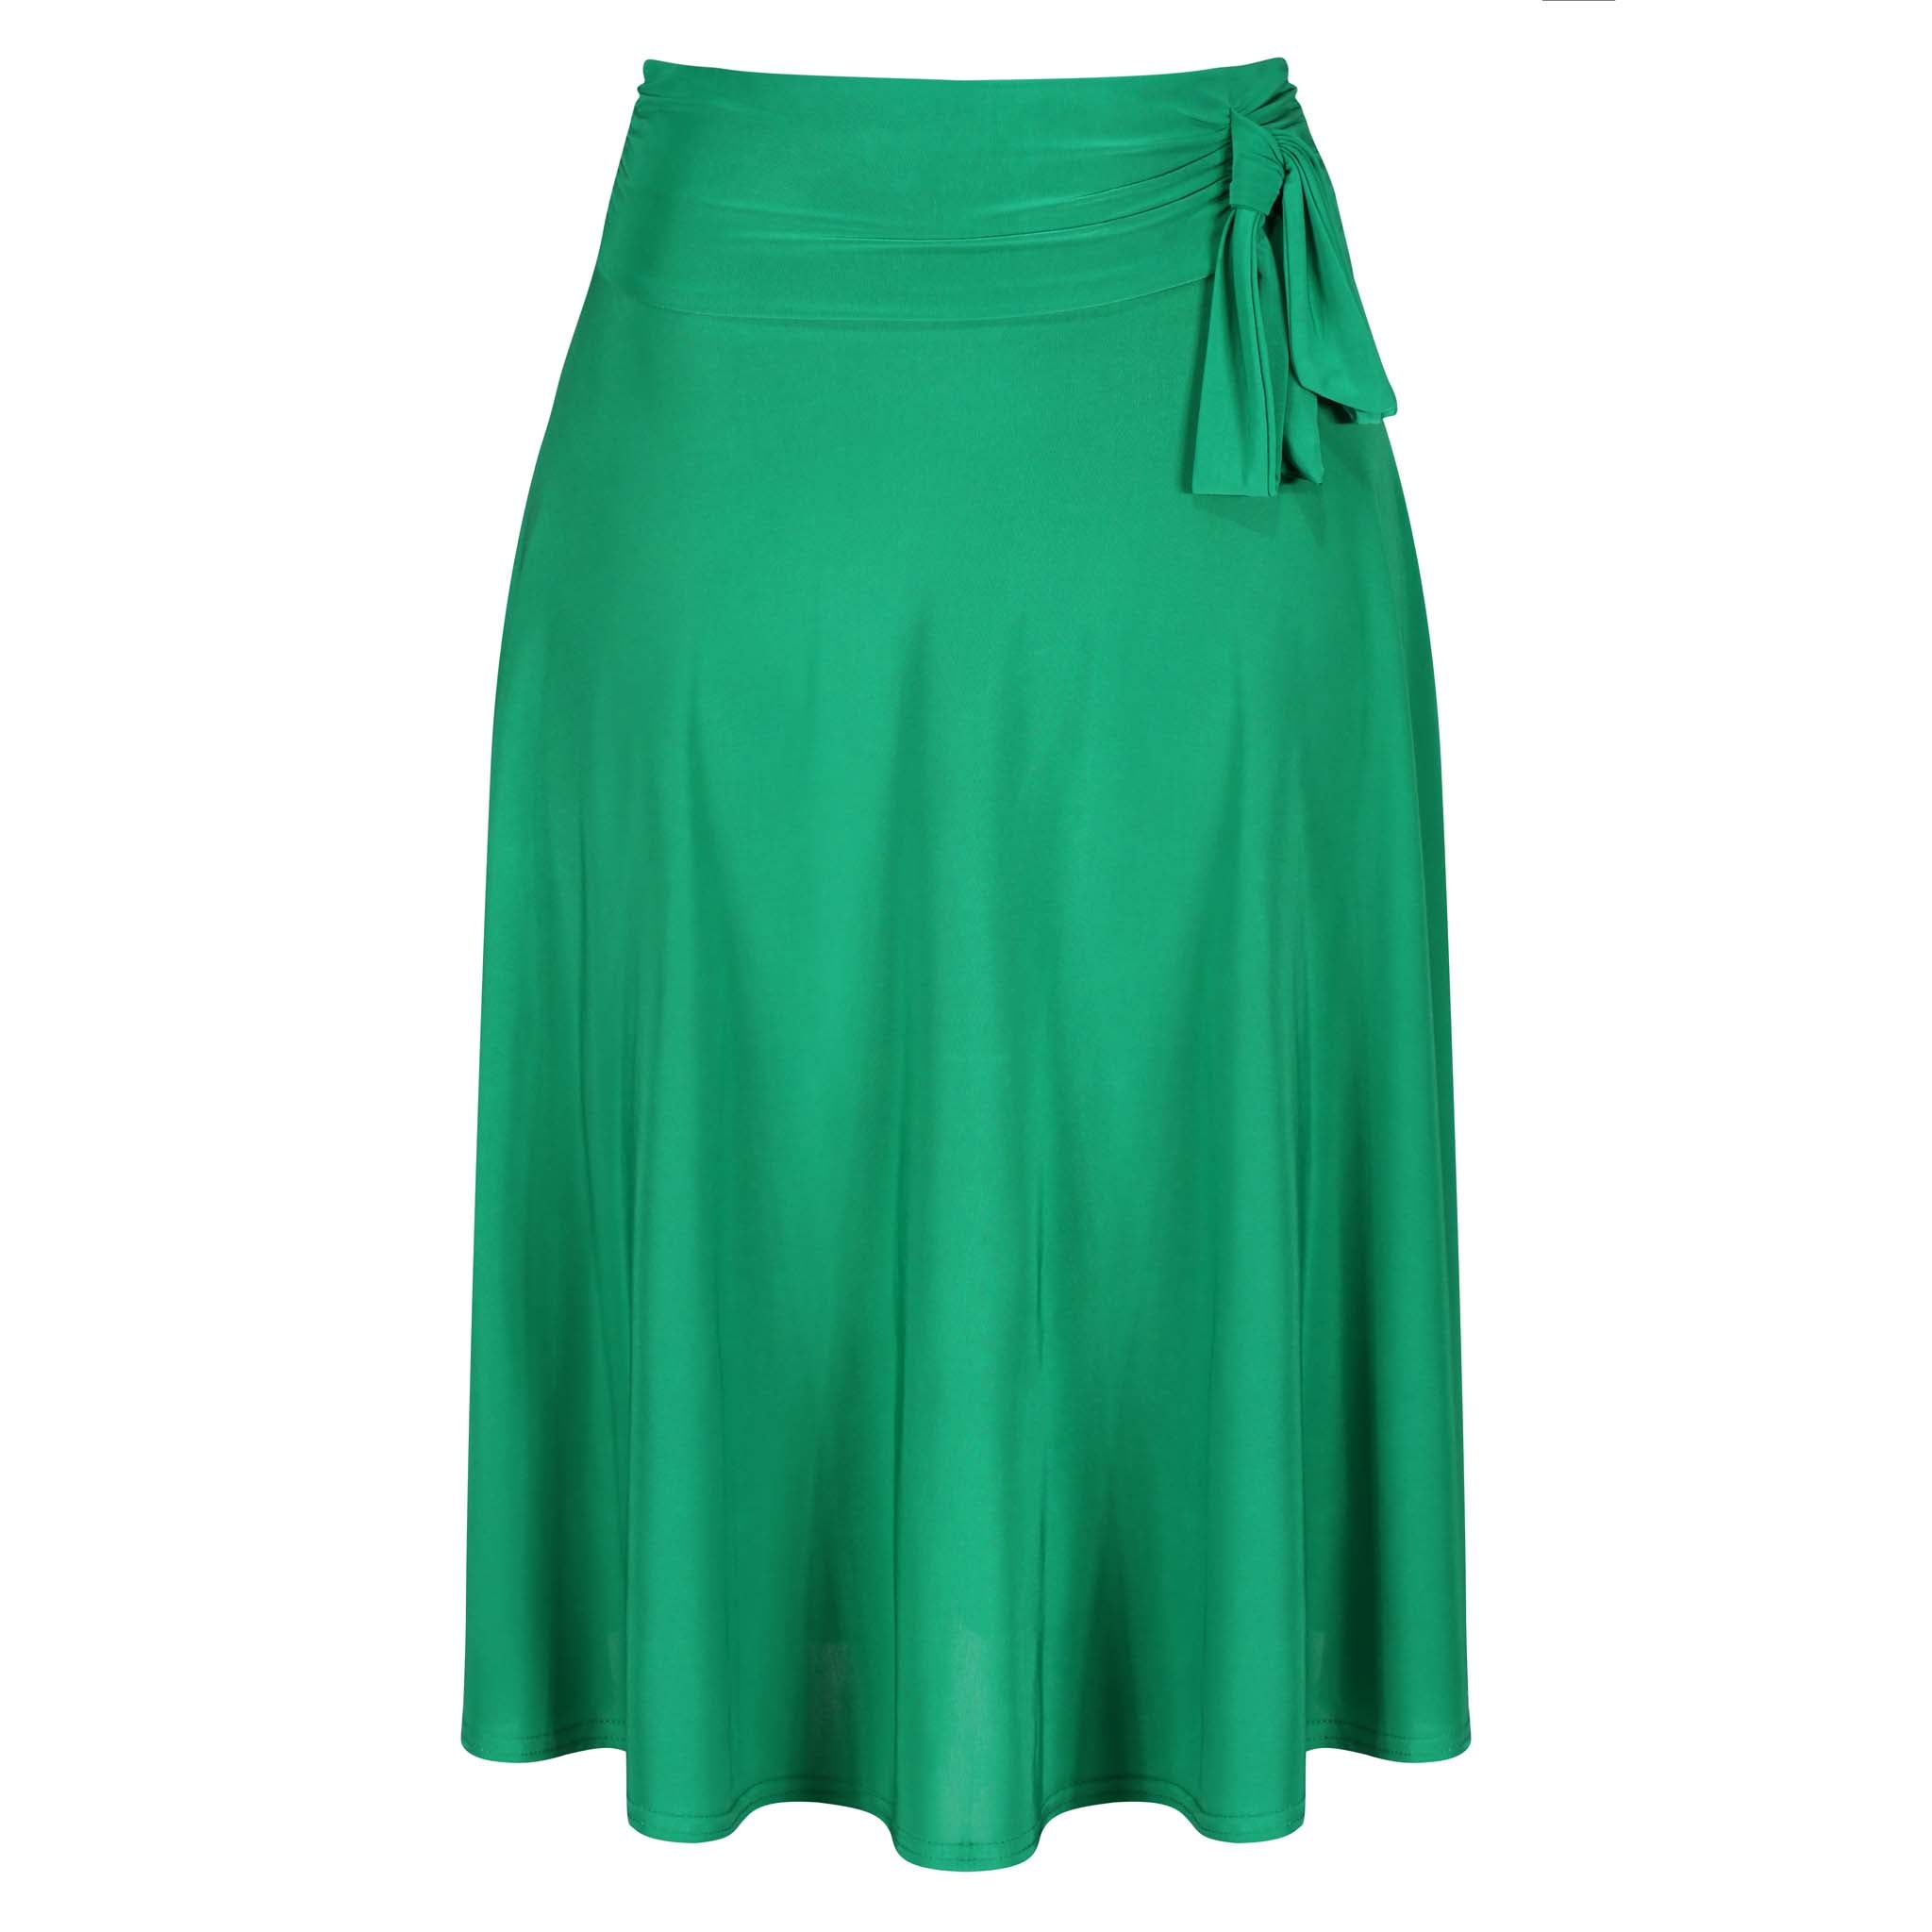 Emerald Green Pin Up Slinky Swing Office Work Flare Skirt